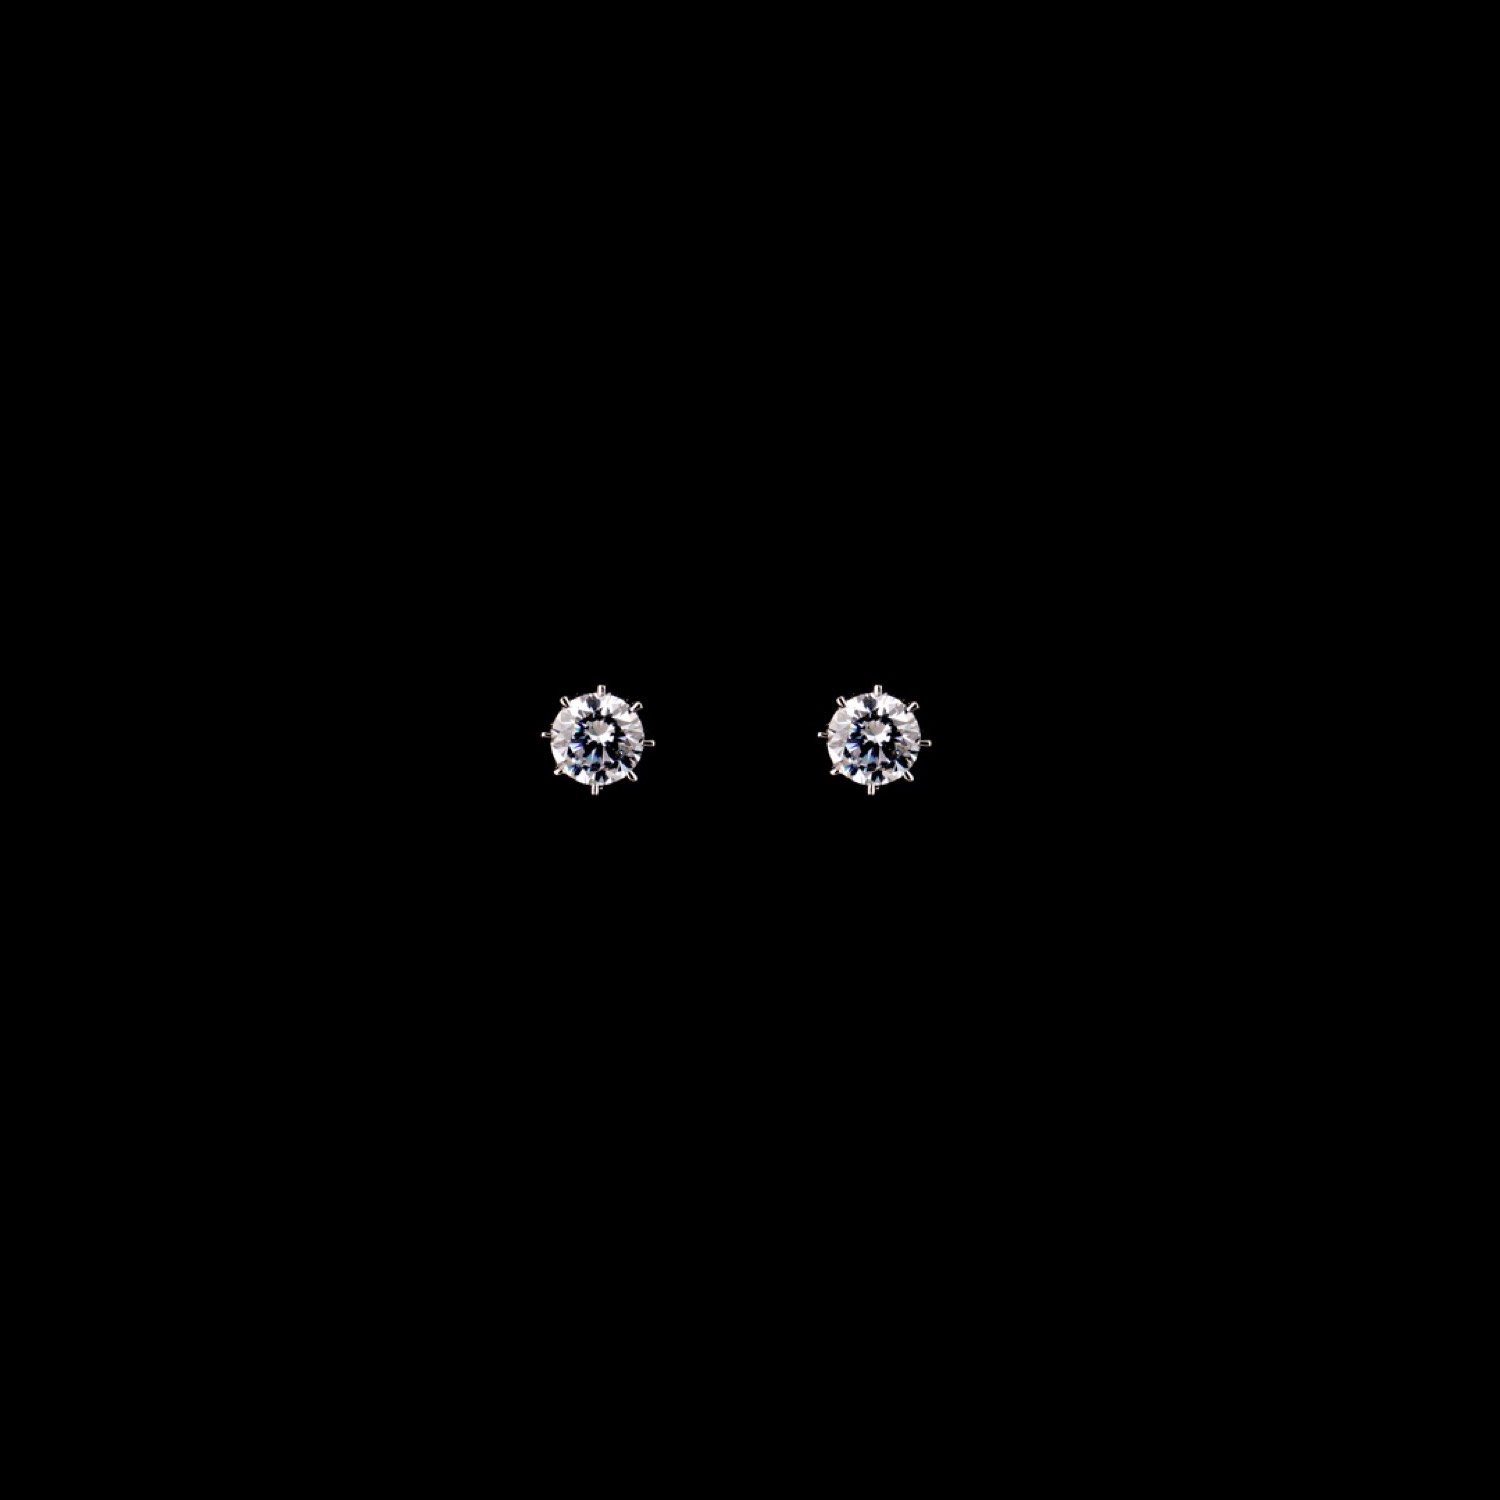 varam_earrings_102022_big_sized_round_cut_single_stone_silver_earrings-1